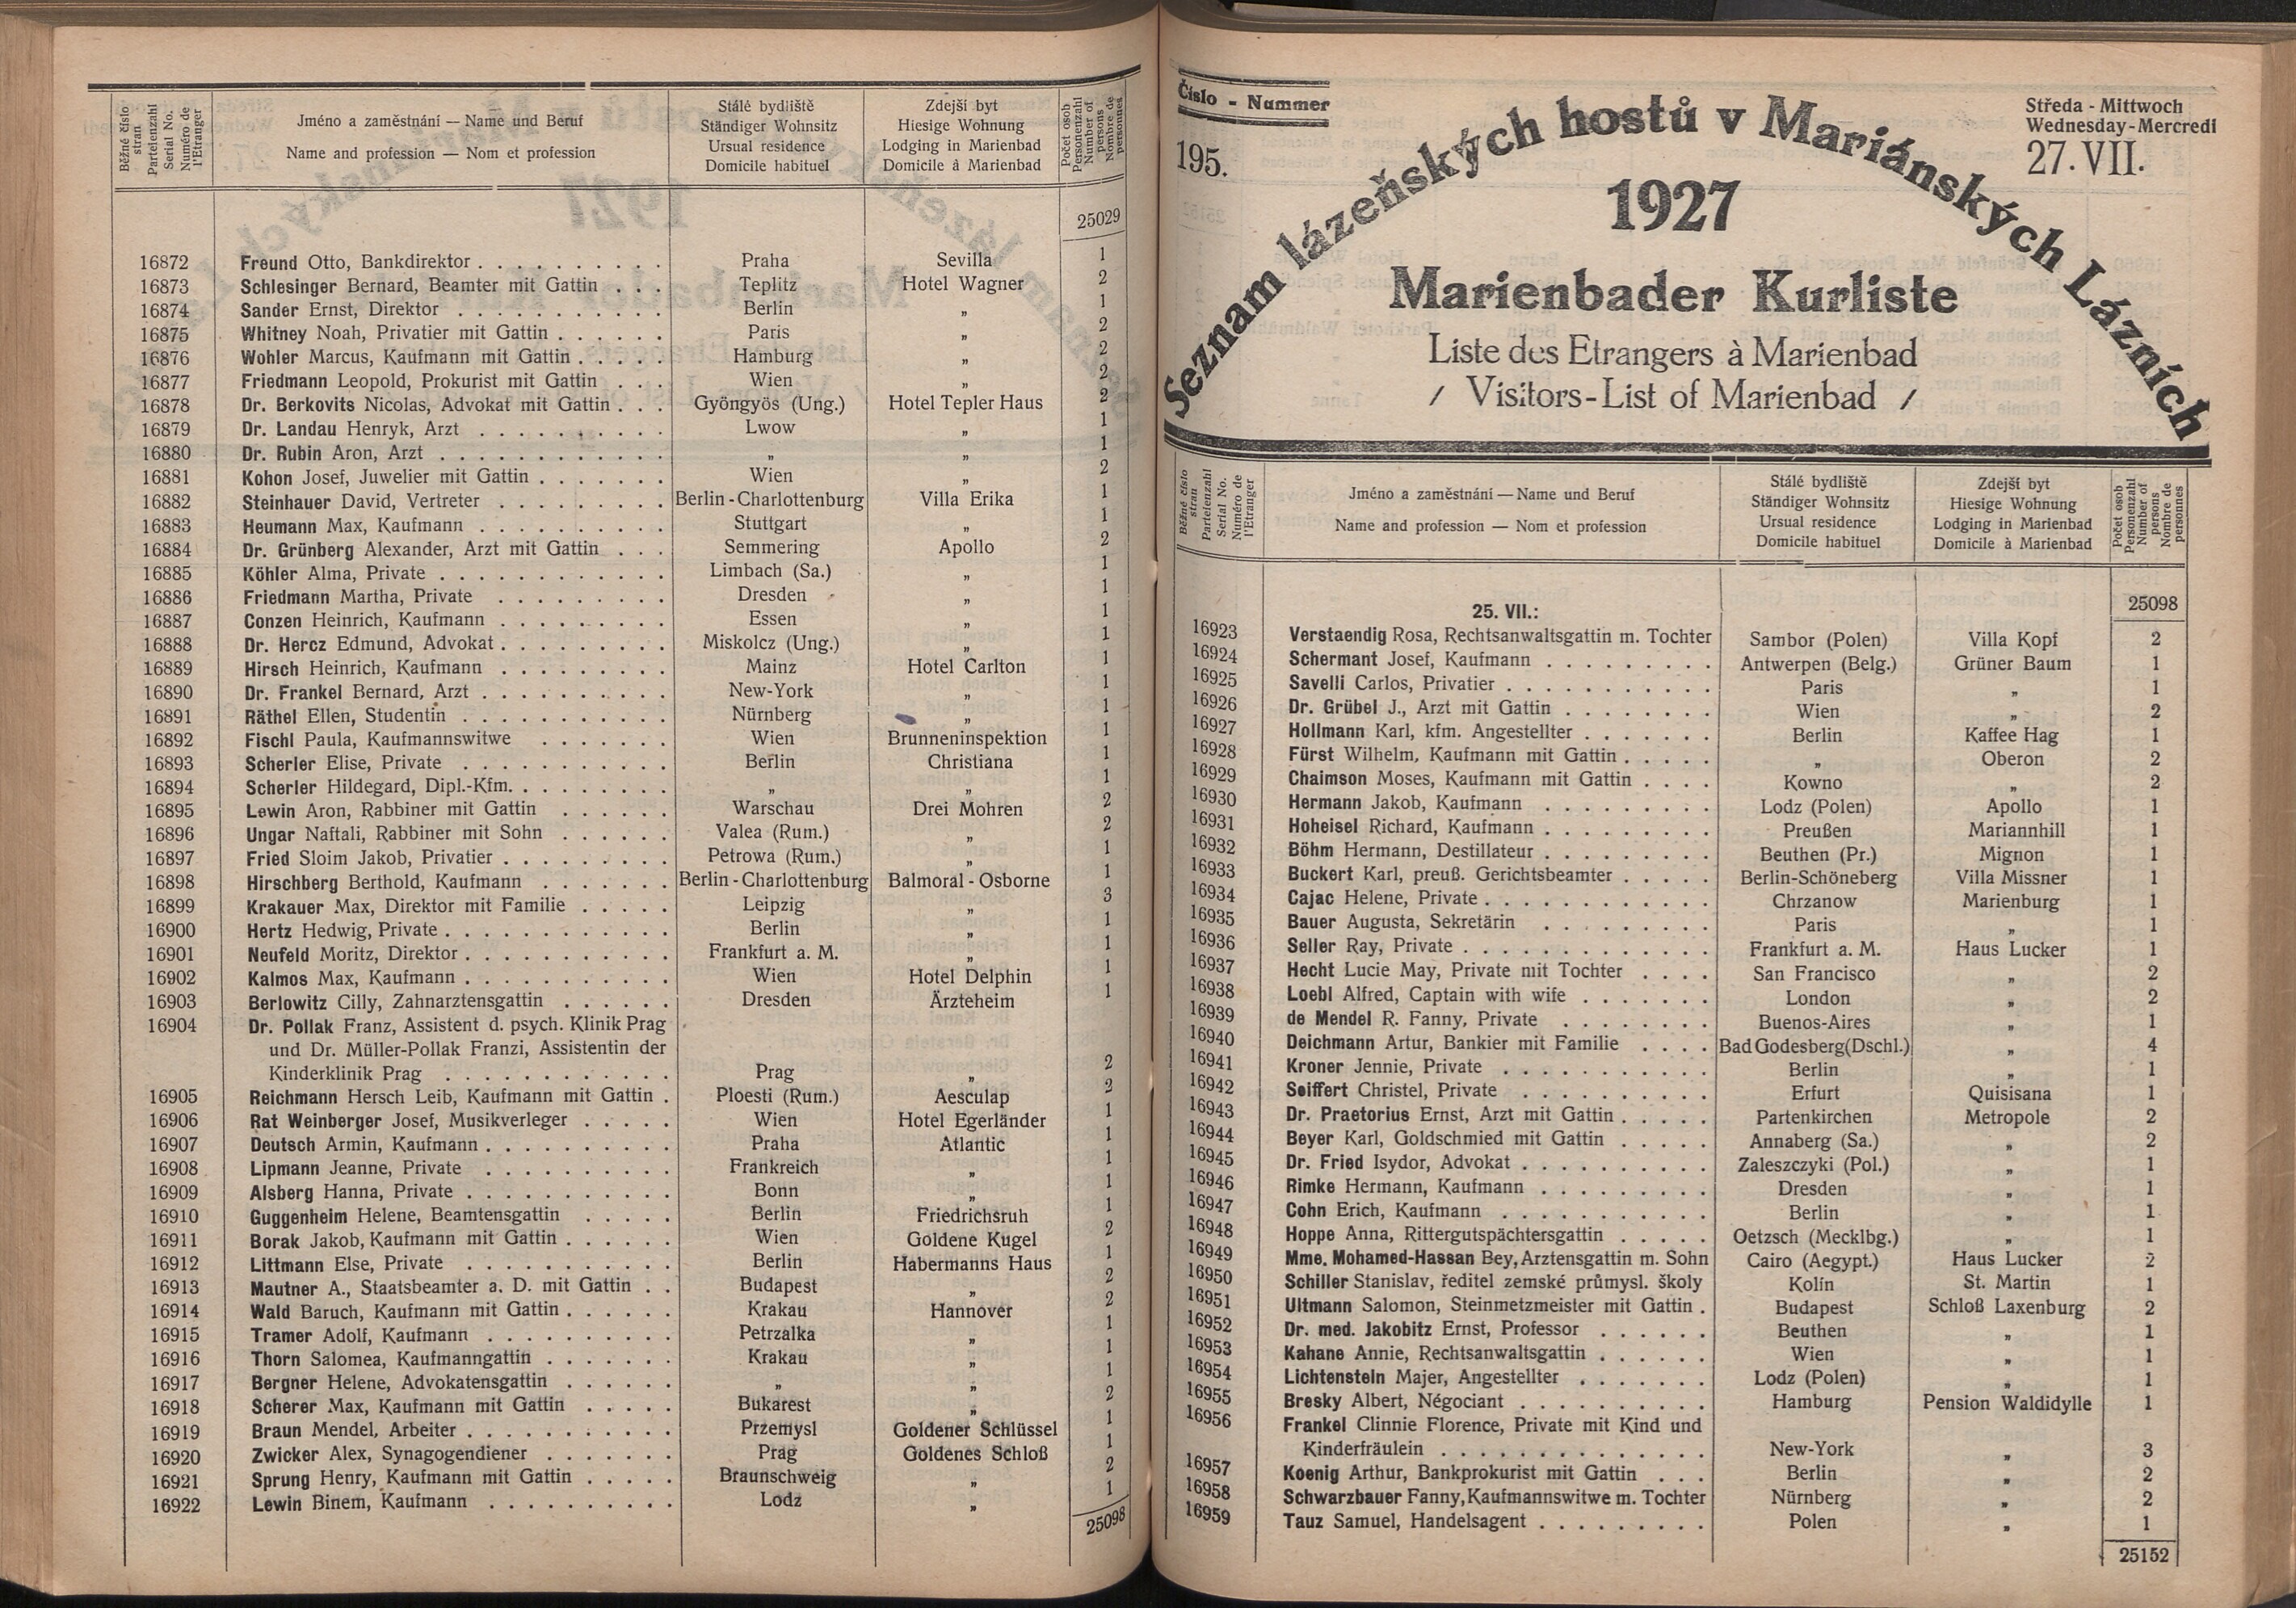 275. soap-ch_knihovna_marienbader-kurliste-1927_2750